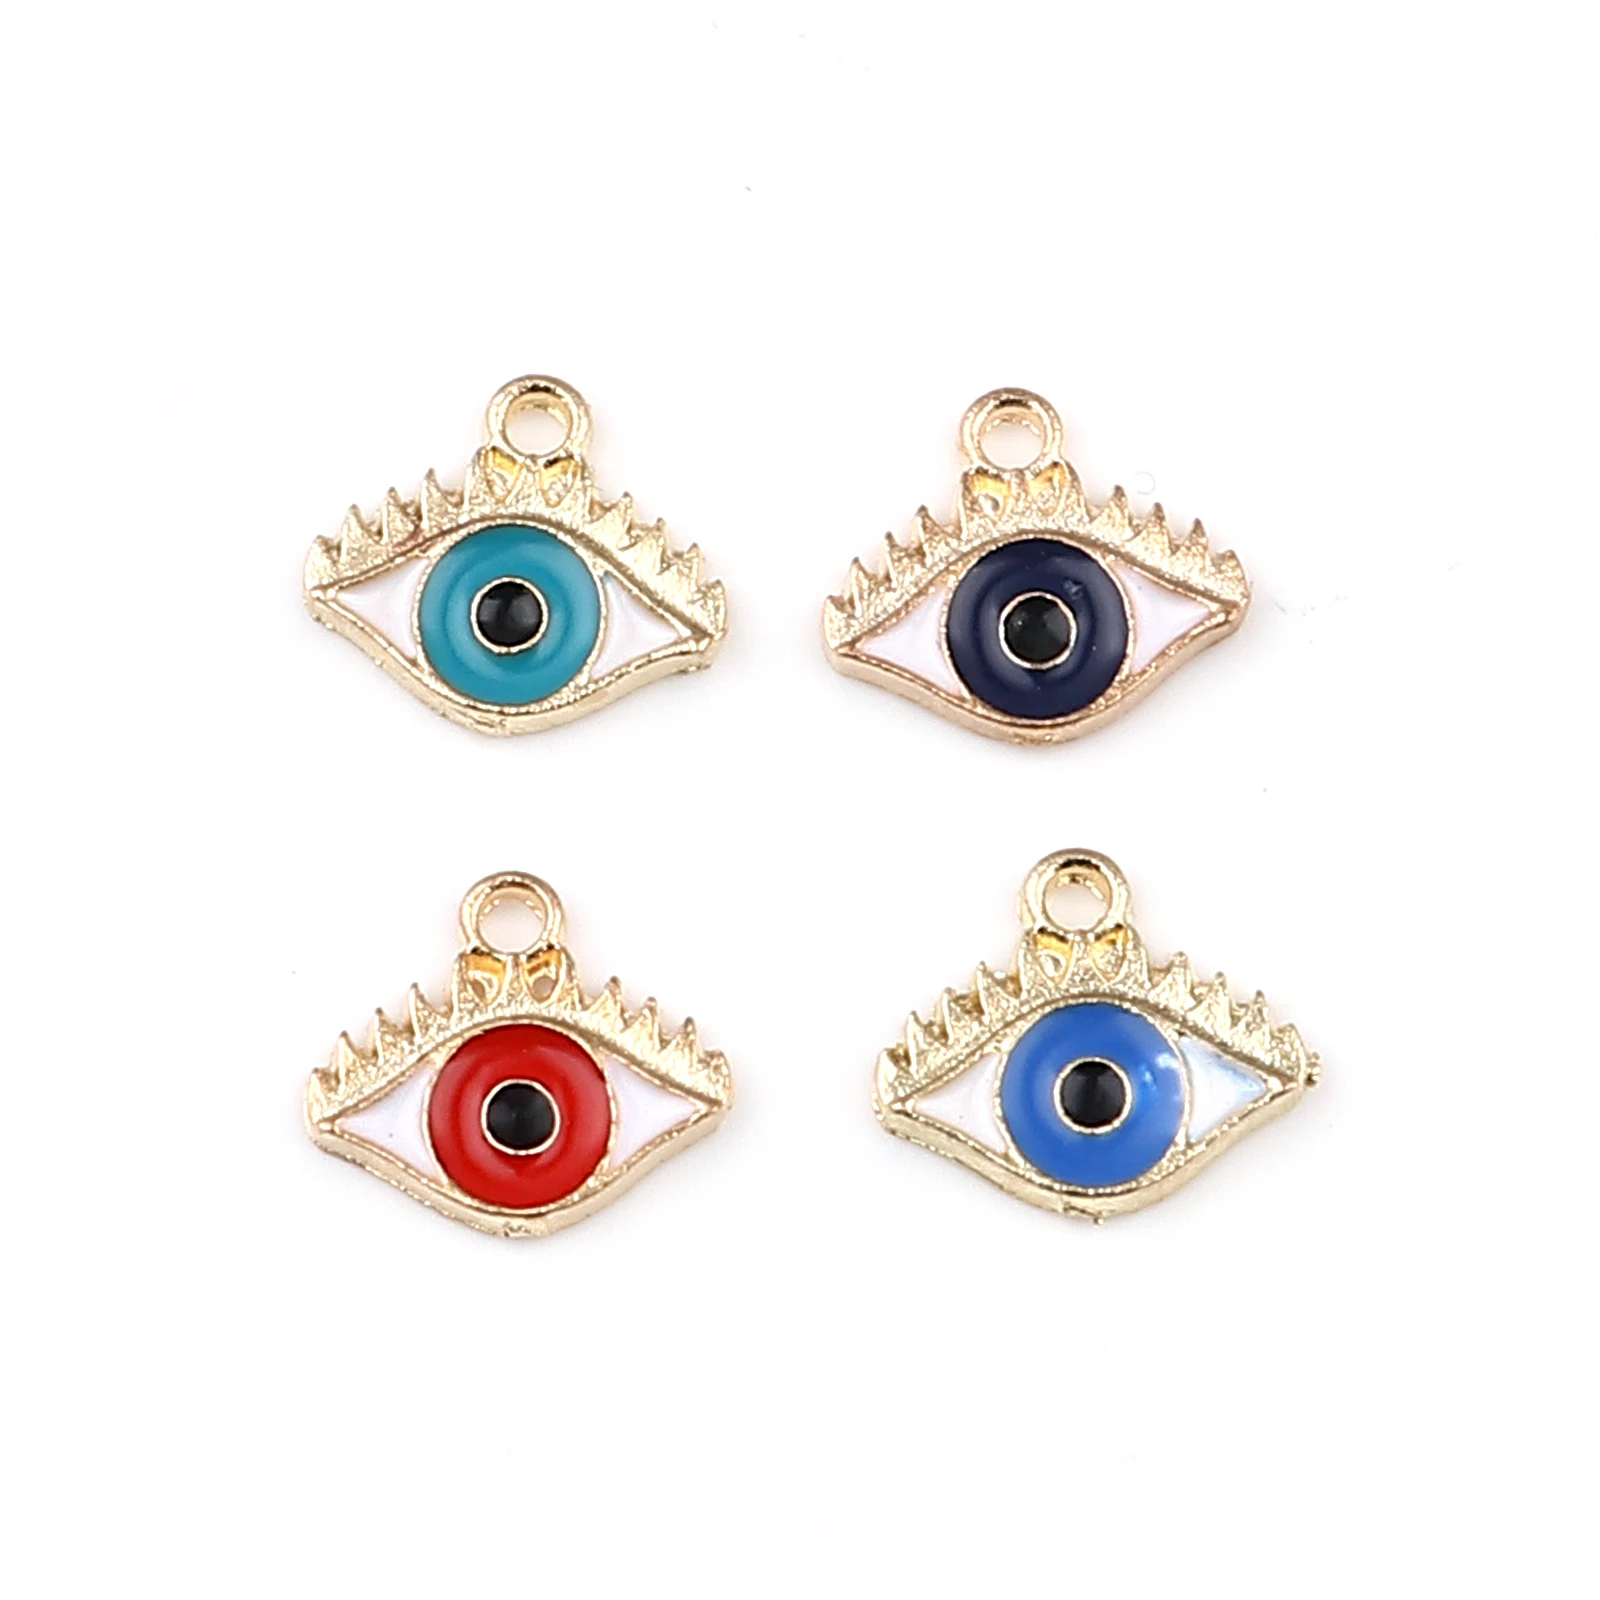 

10 PCs Enamel Evil Eye Charms Zinc Based Alloy Religious Charm Eye Gold Color Pendants DIY Jewelry Earring Making 13mm x 12mm